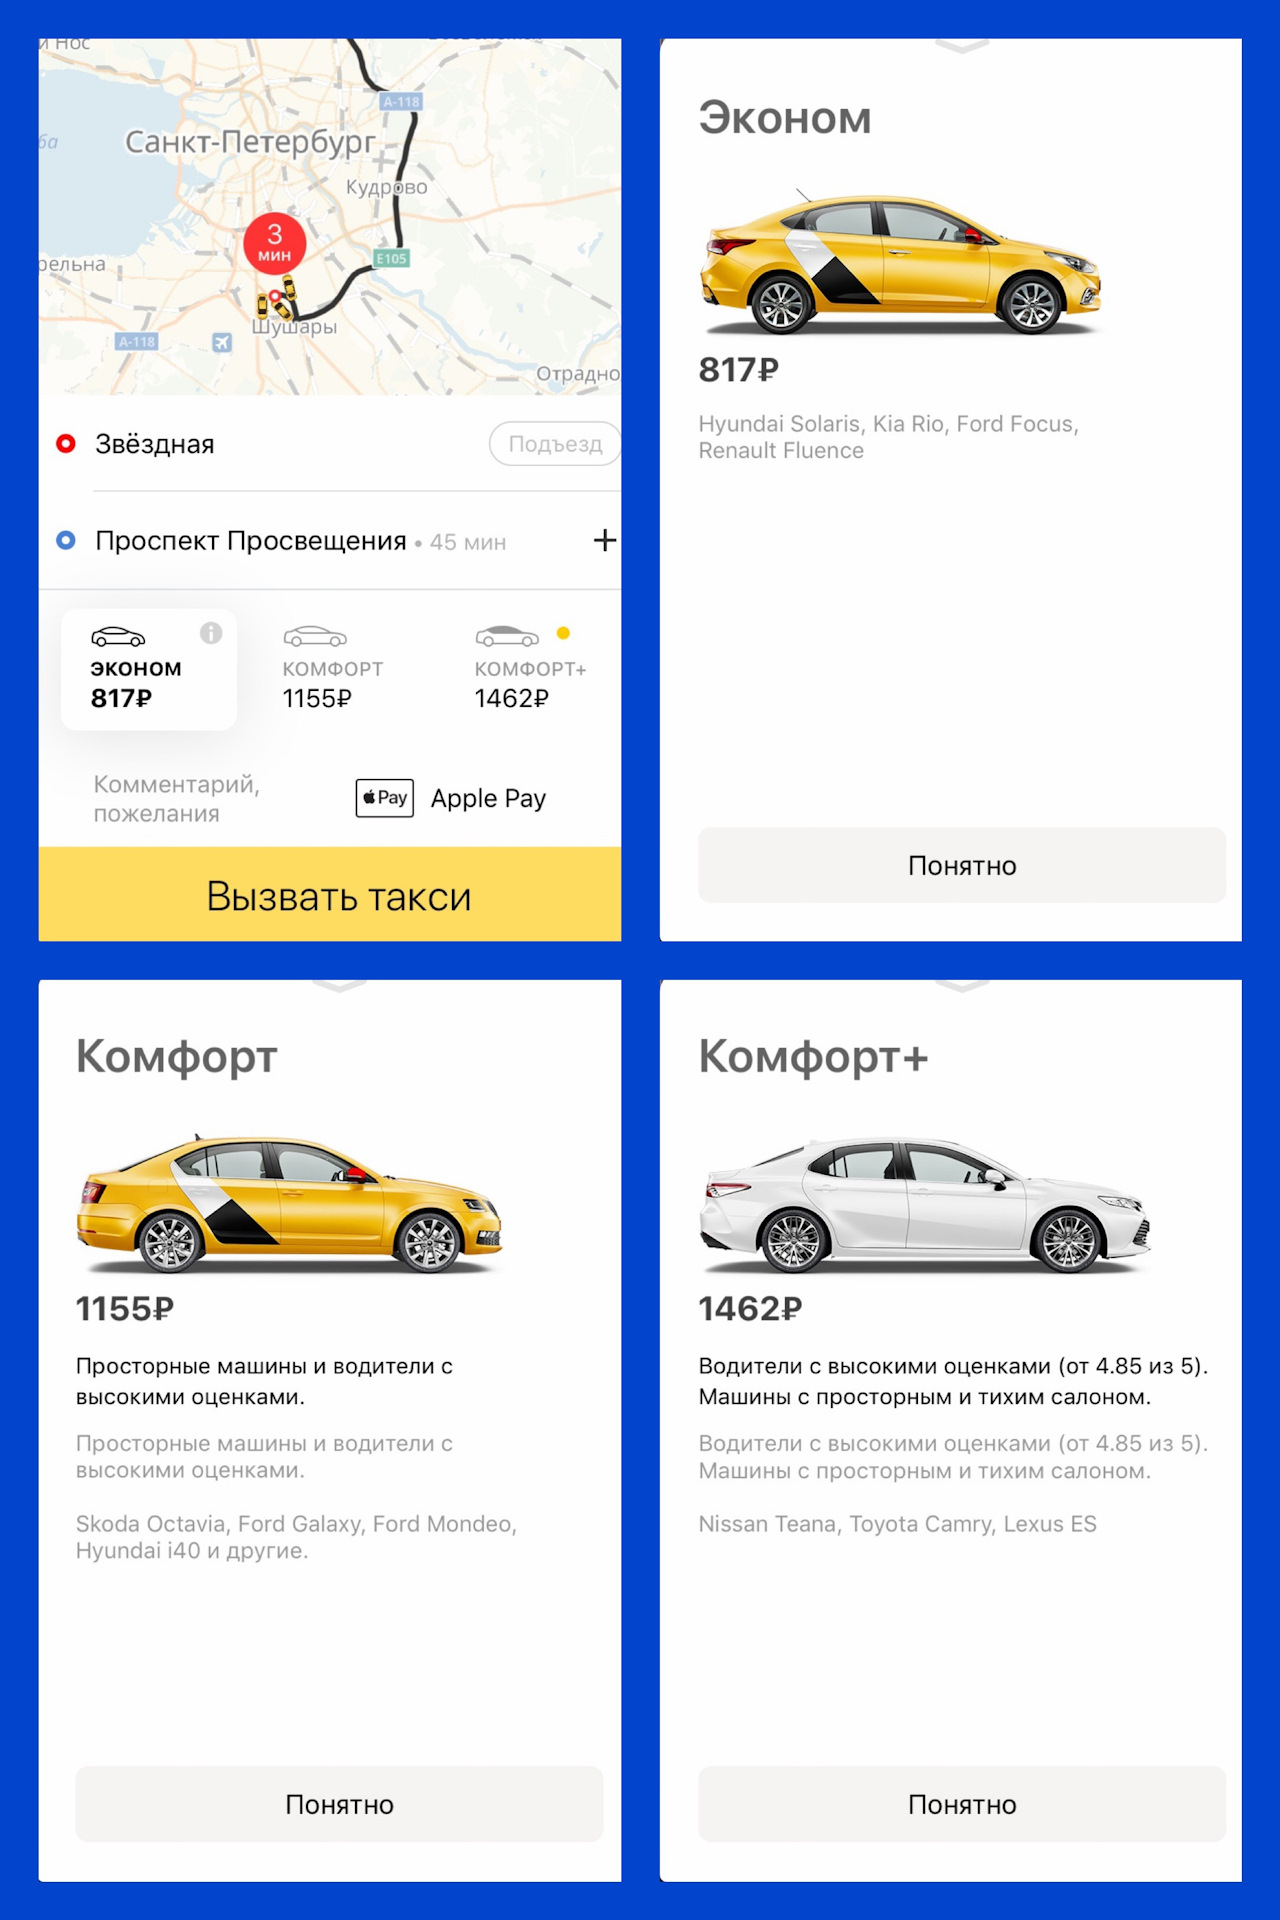 Яндекс такси комфорт требования к водителю